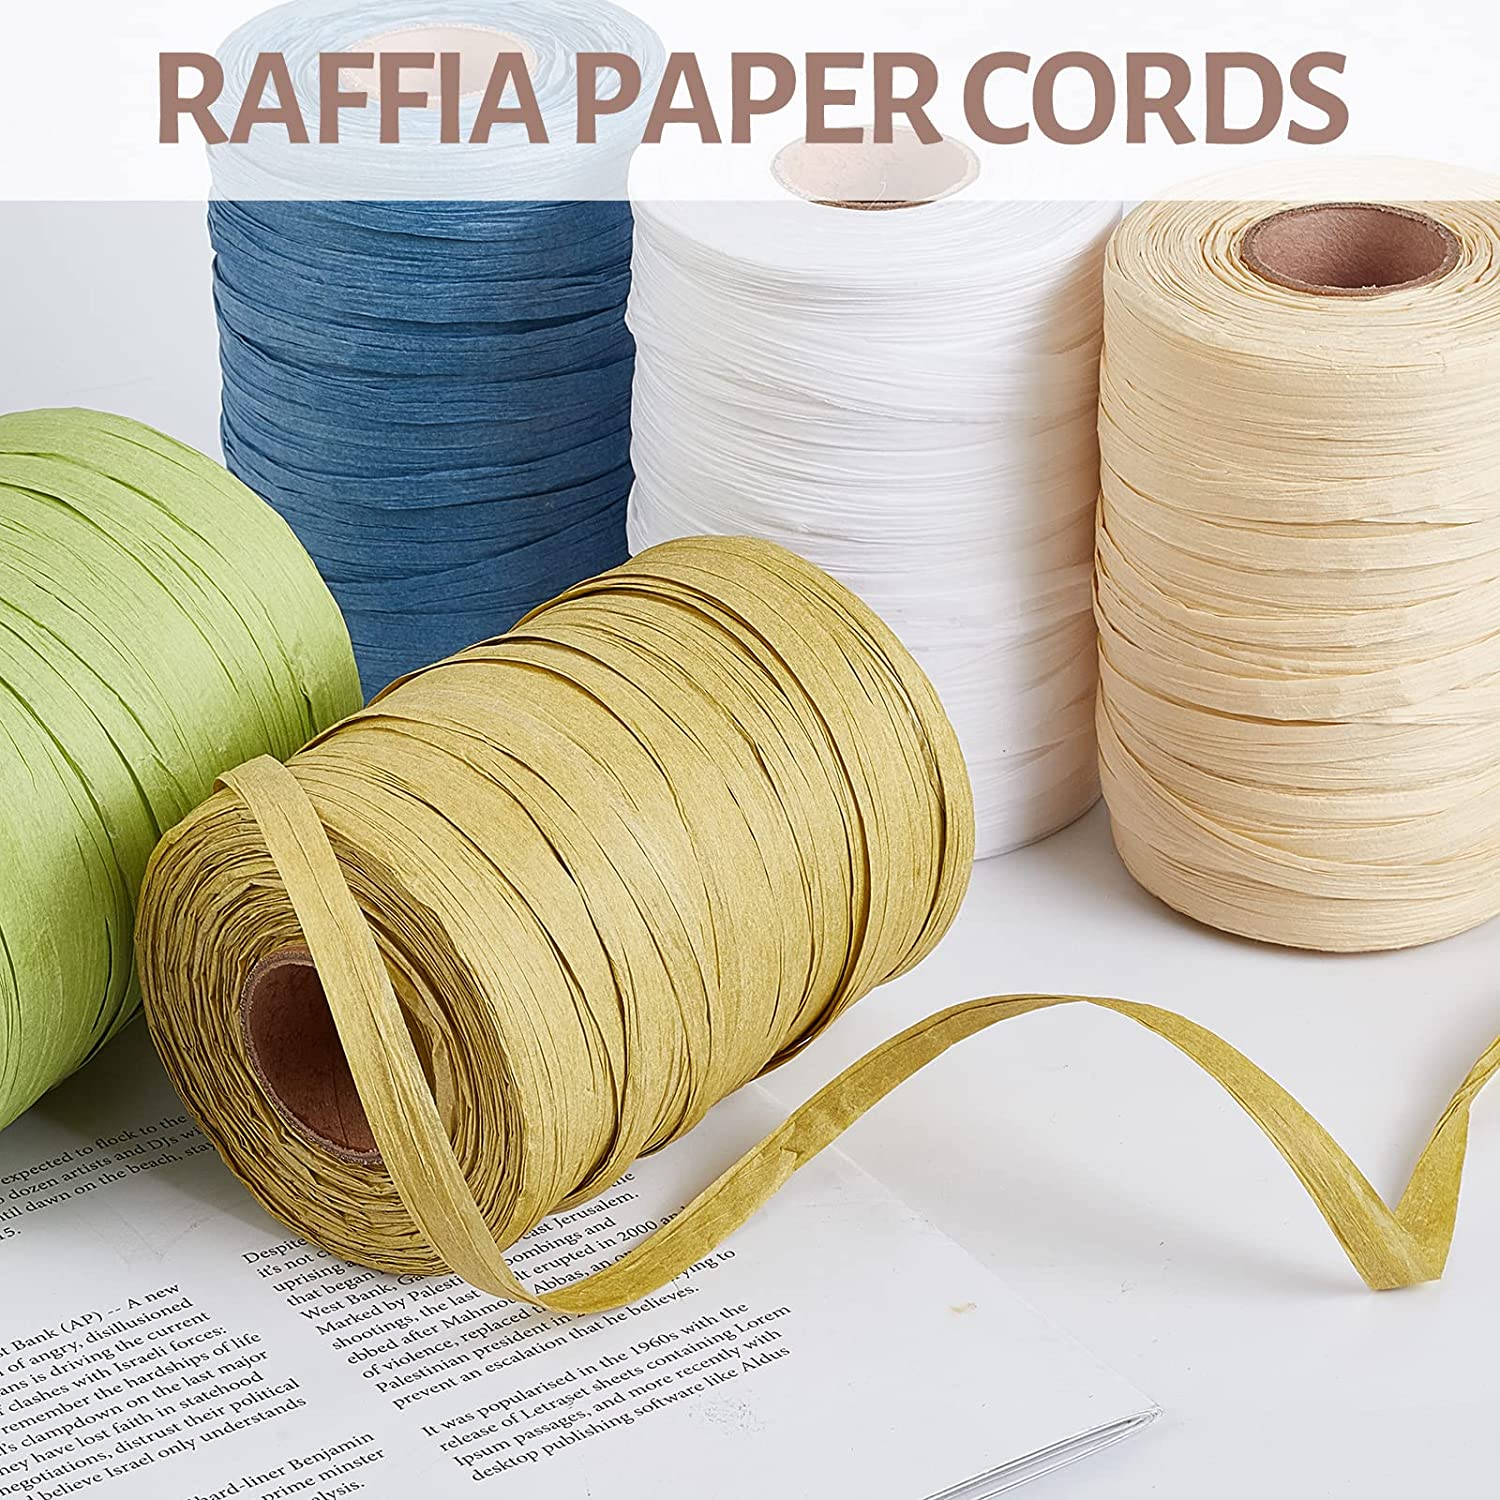 Raffia Decoration Ribbon, Lace Scrapbooking Crafts